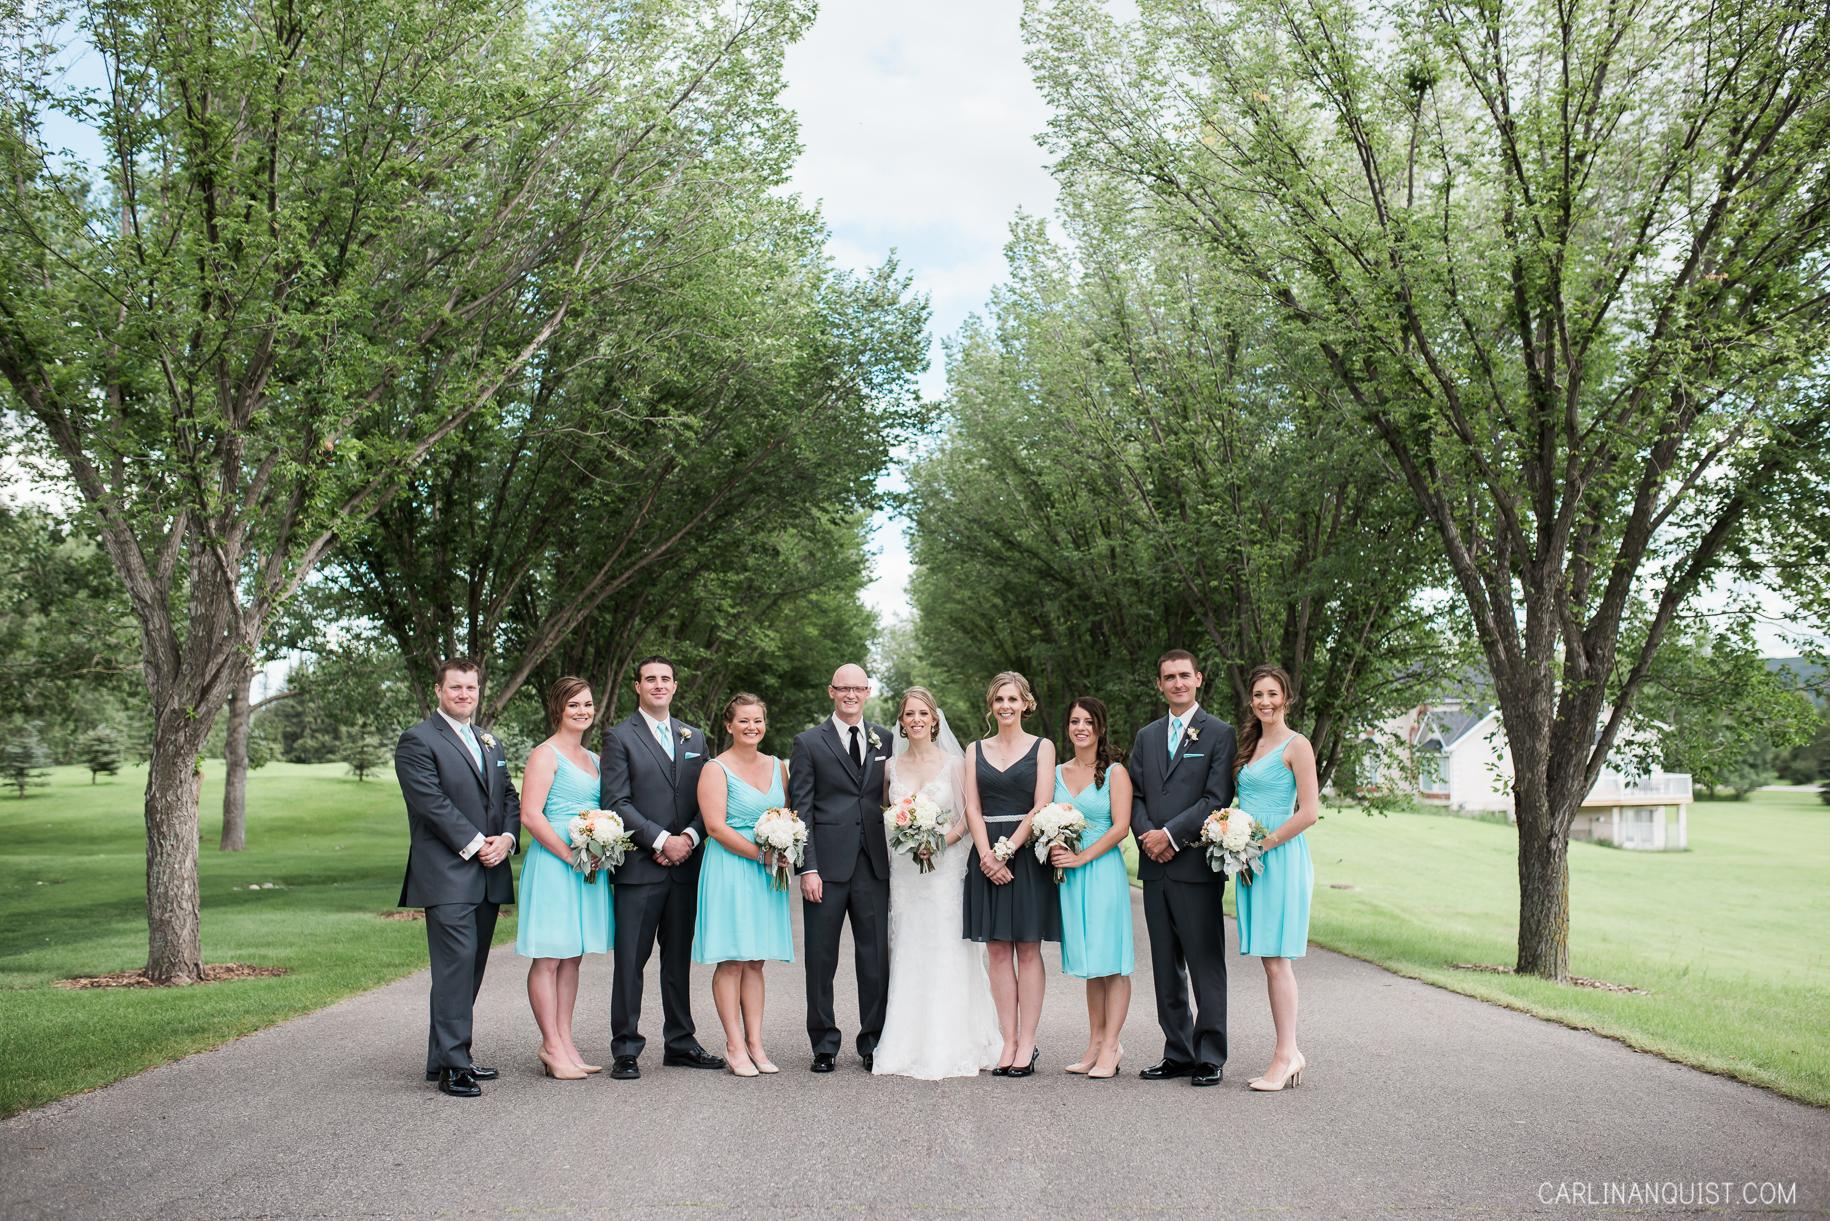 Bridal Party Photos | Pinebrook Golf Course Wedding Photographer